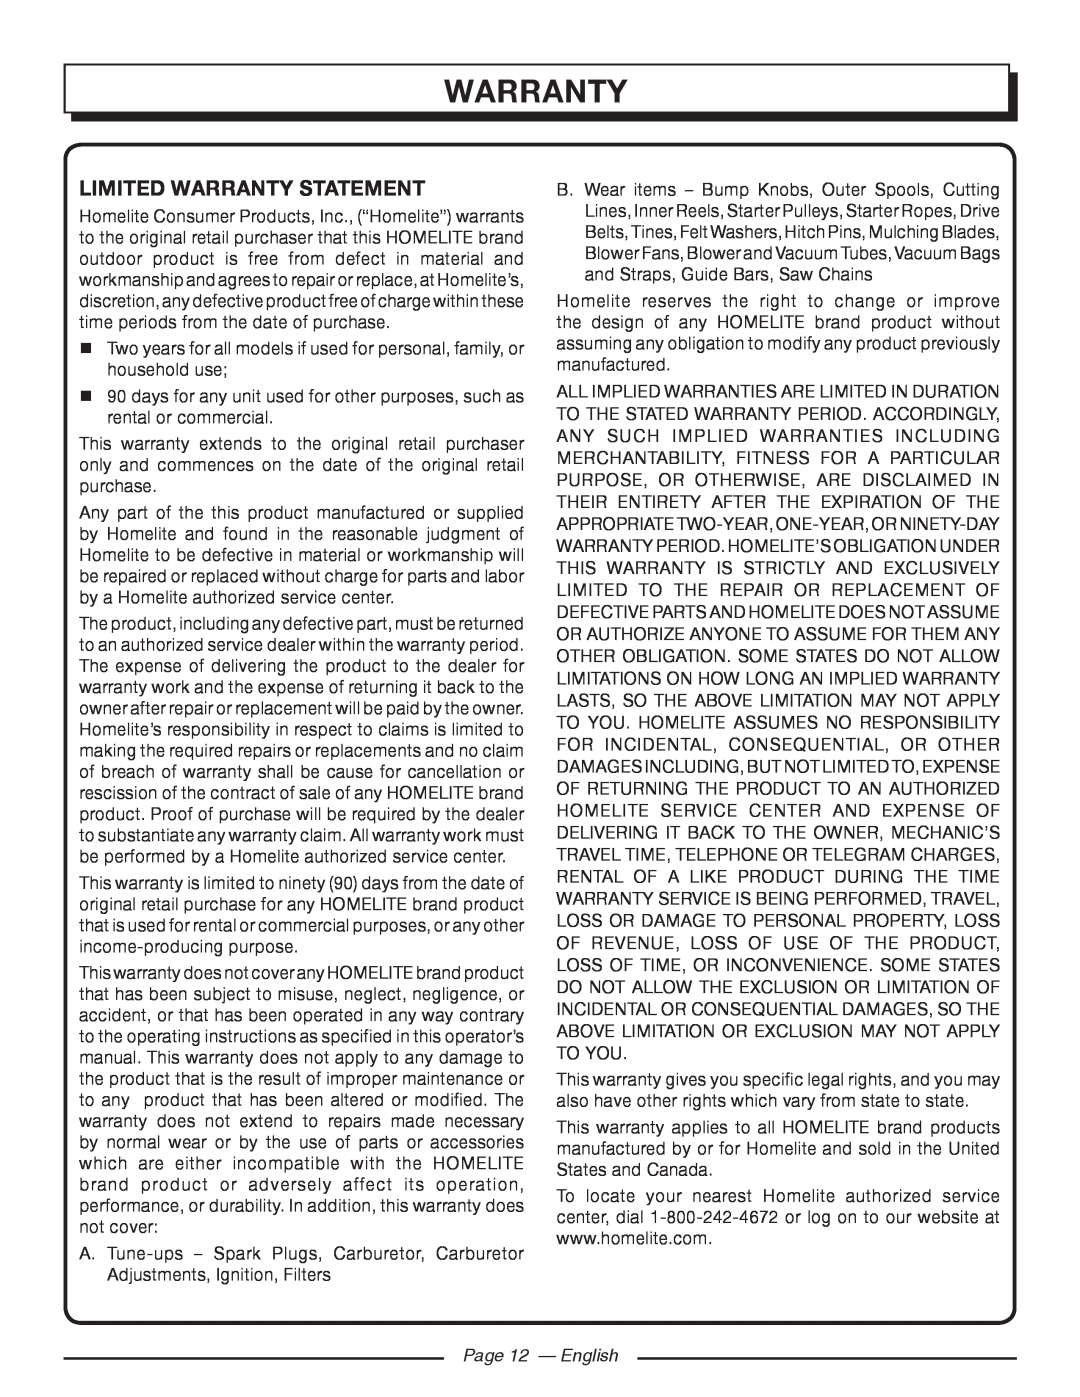 Homelite UT21006 manuel dutilisation Limited Warranty Statement, Page 12 - English 